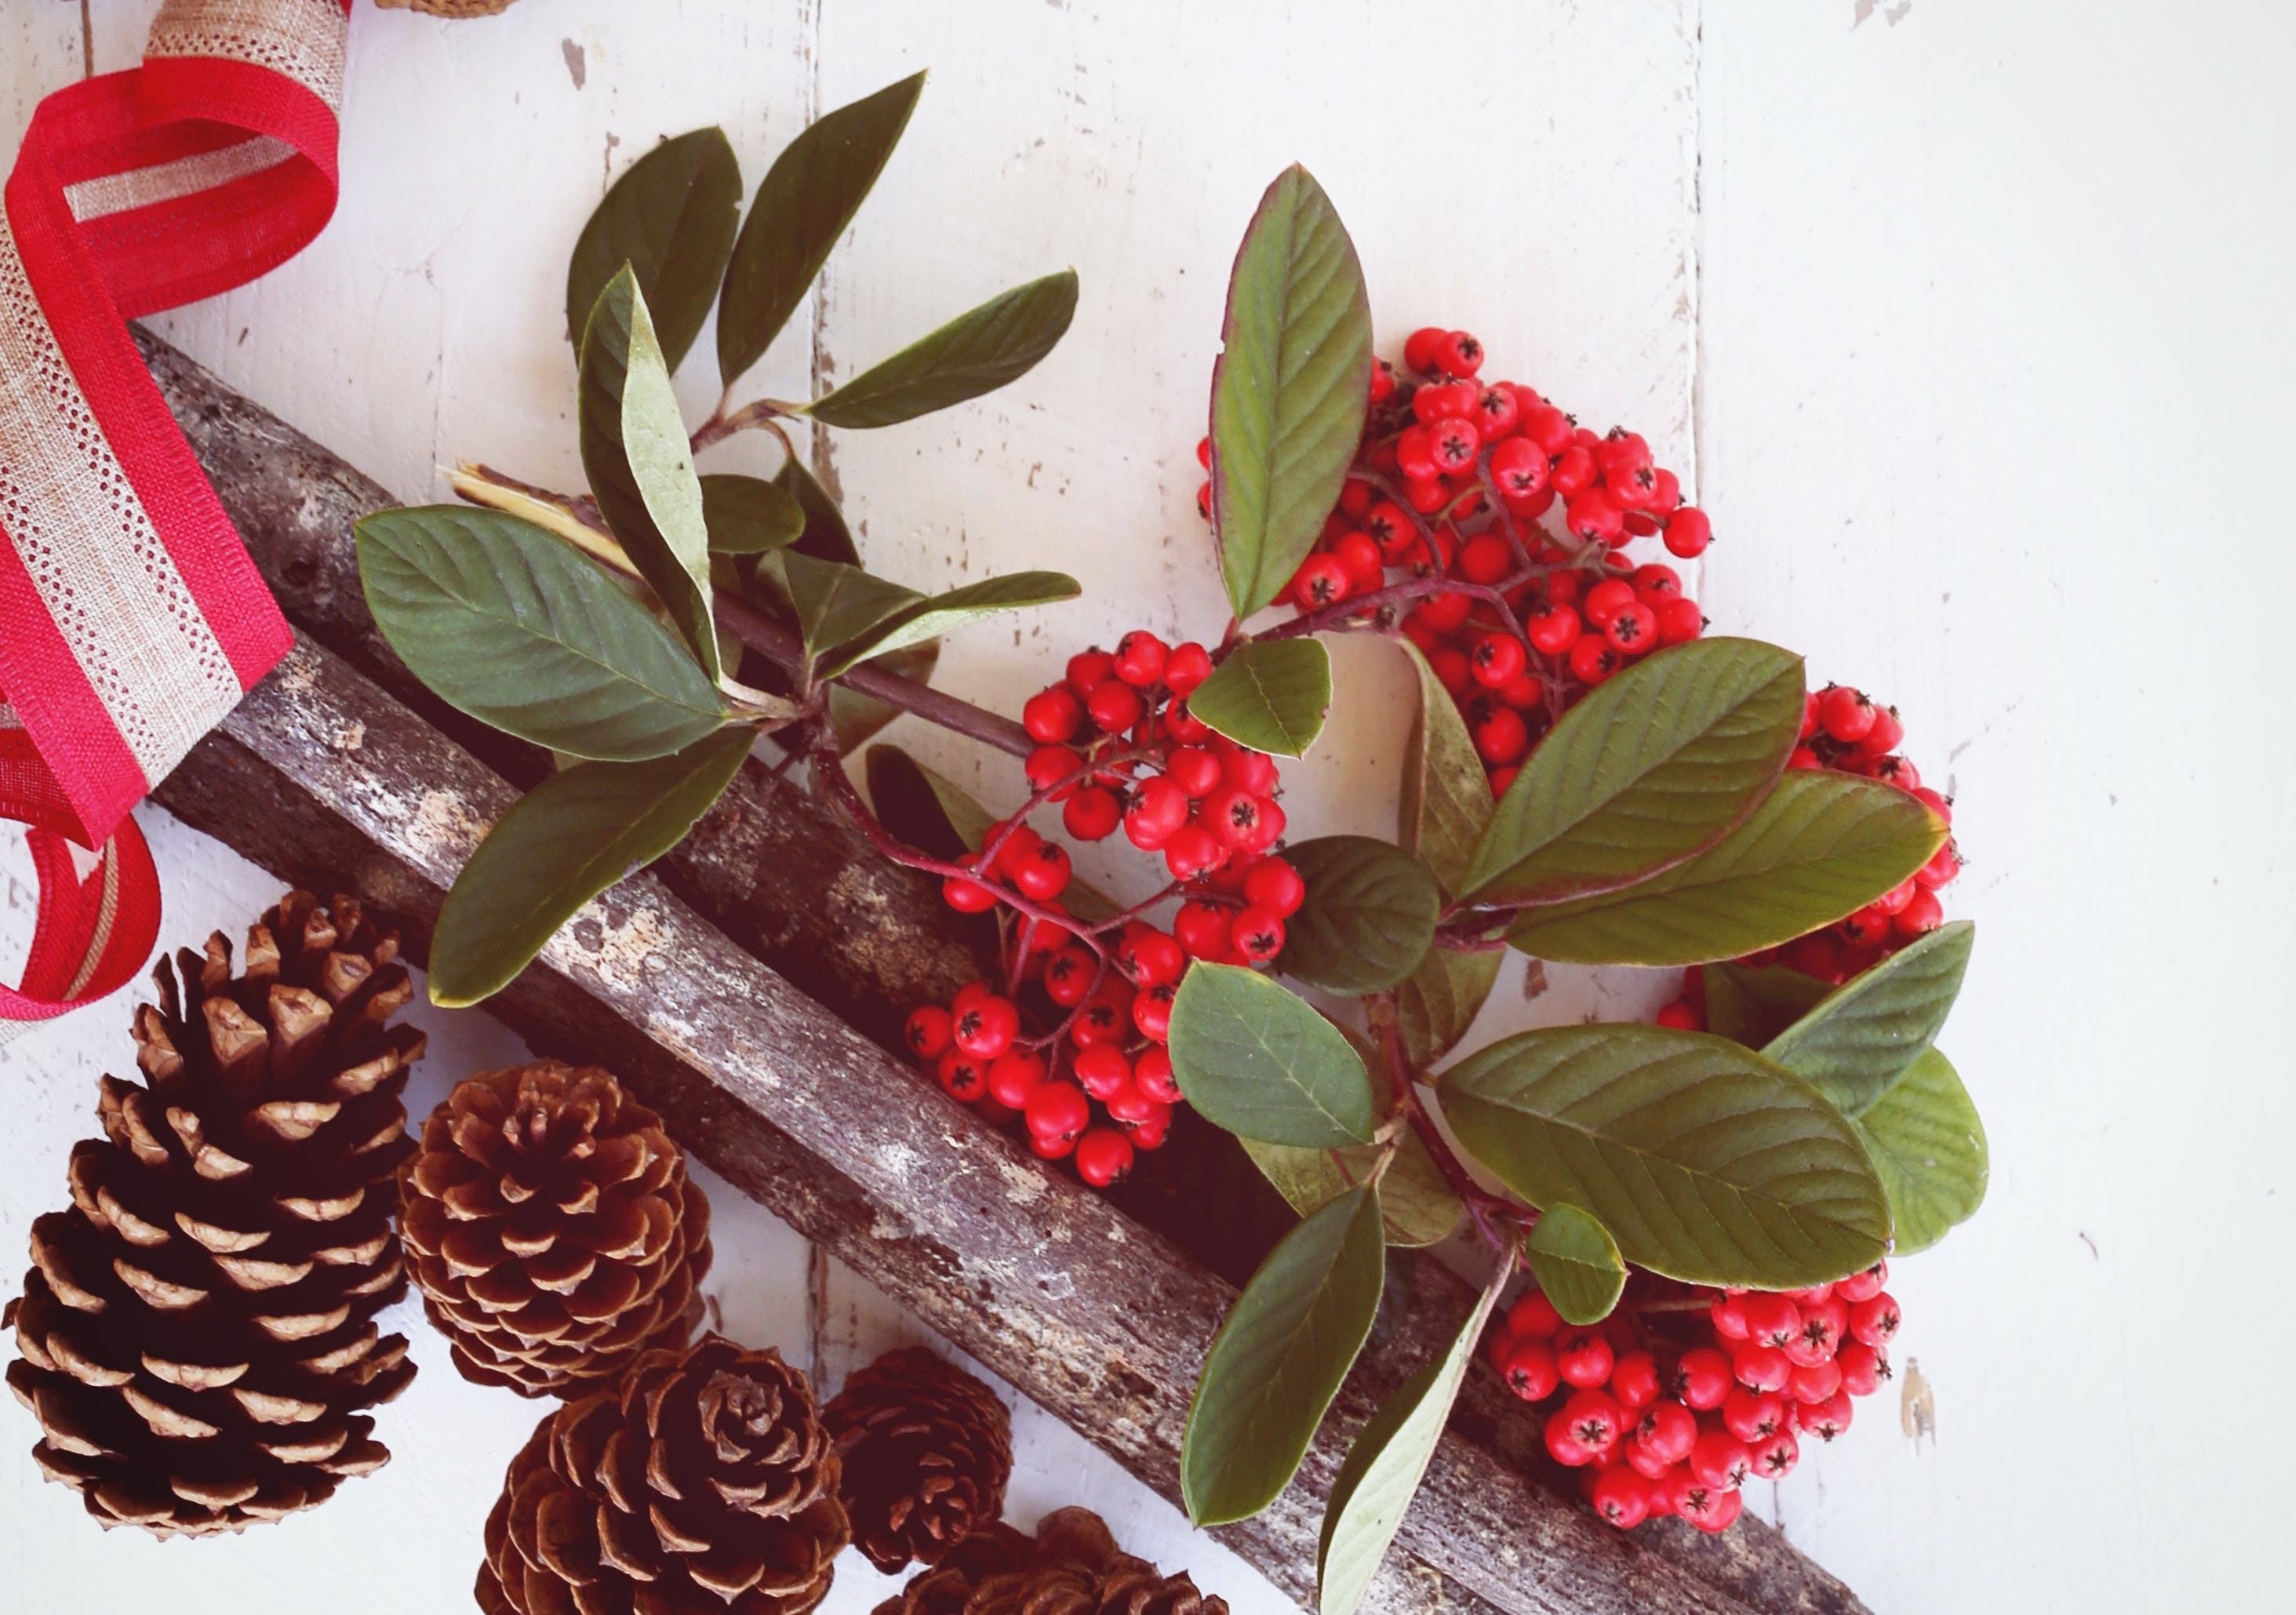 Homemade, environmentally sustainable Christmas decorations